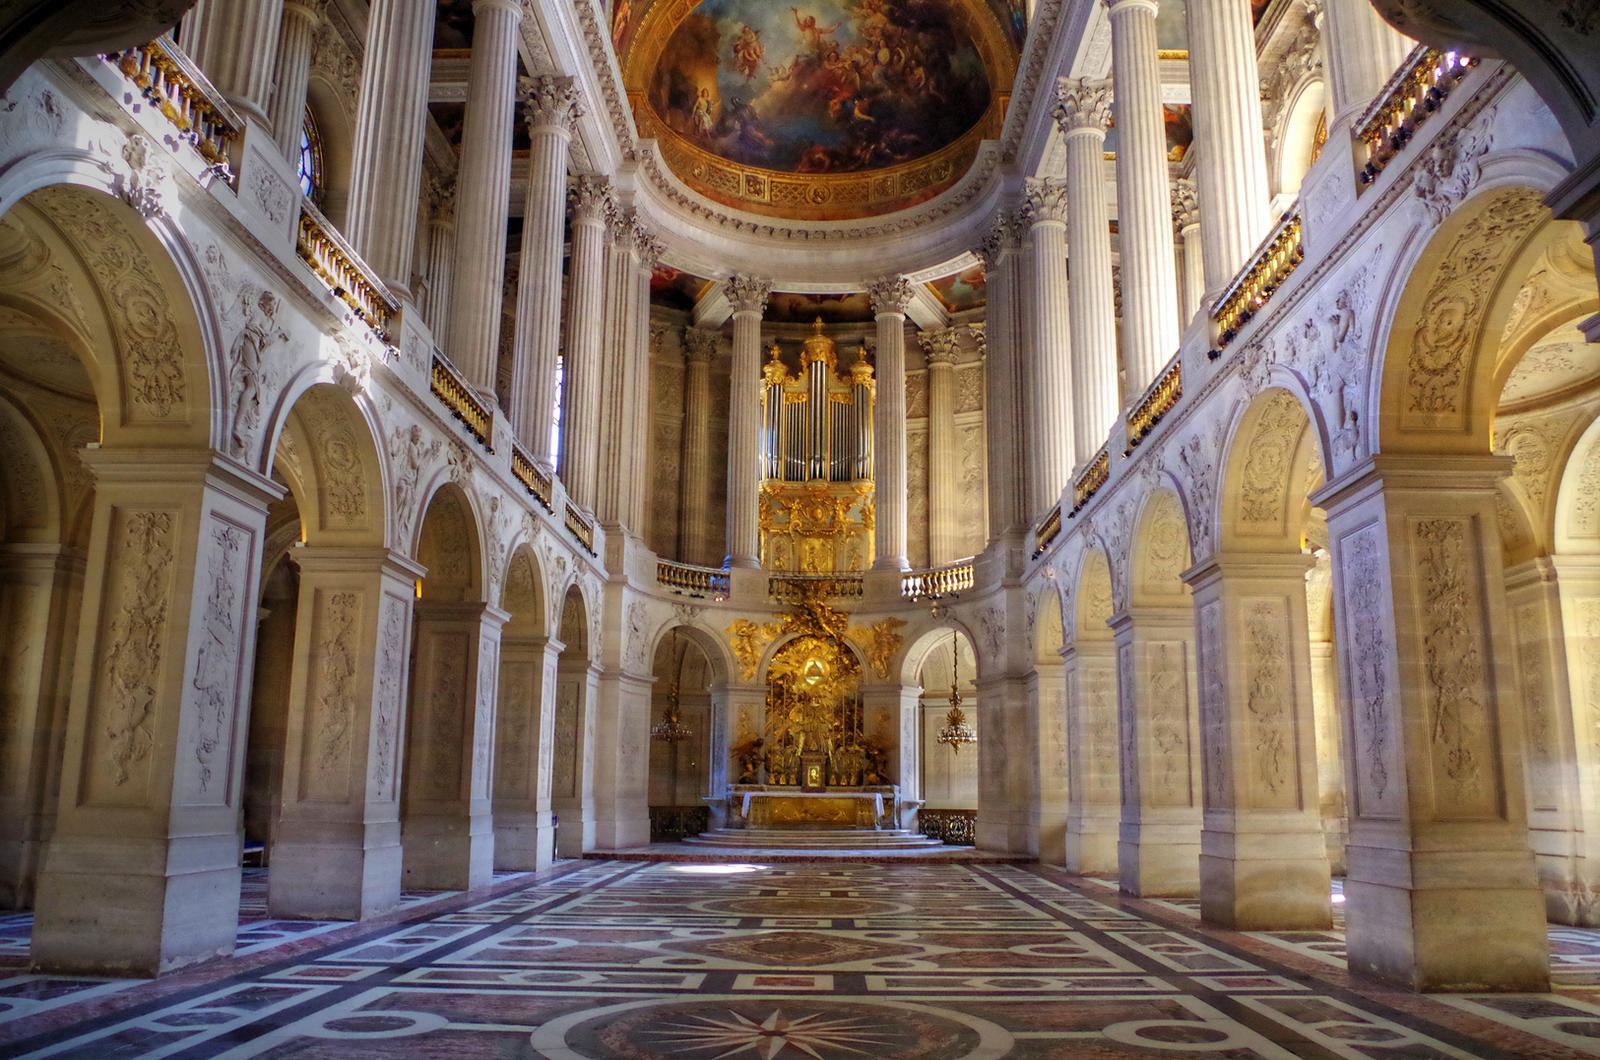 The Chapel of Versailles